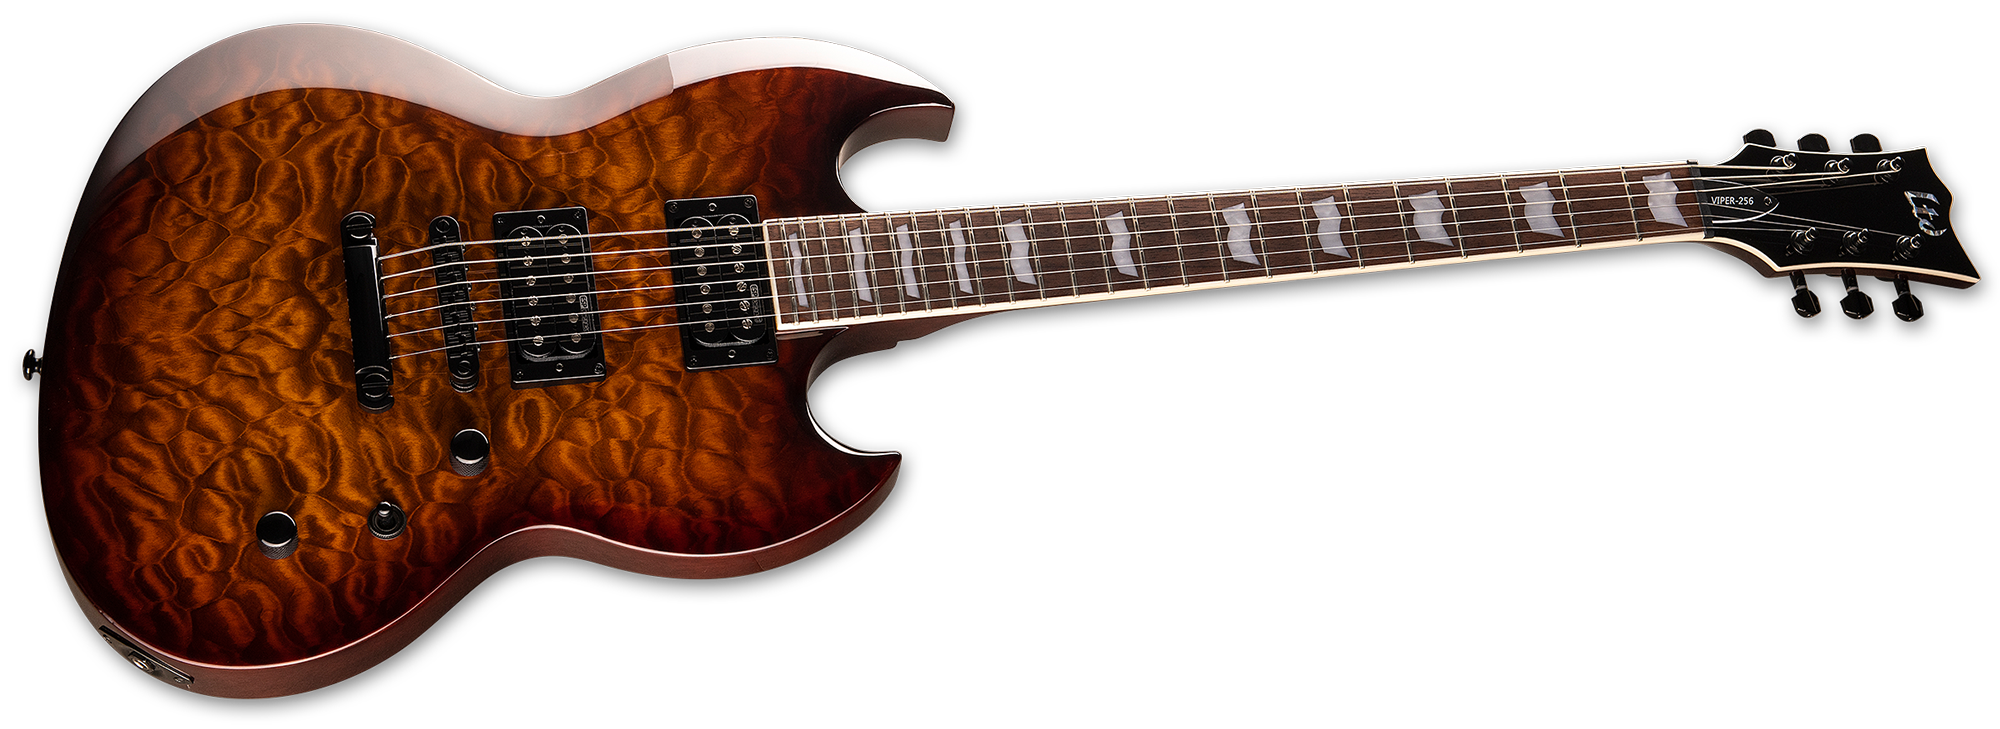 Ltd Viper-256 Hh Ht Jat - Dark Brown Sunburst - Double cut electric guitar - Variation 1